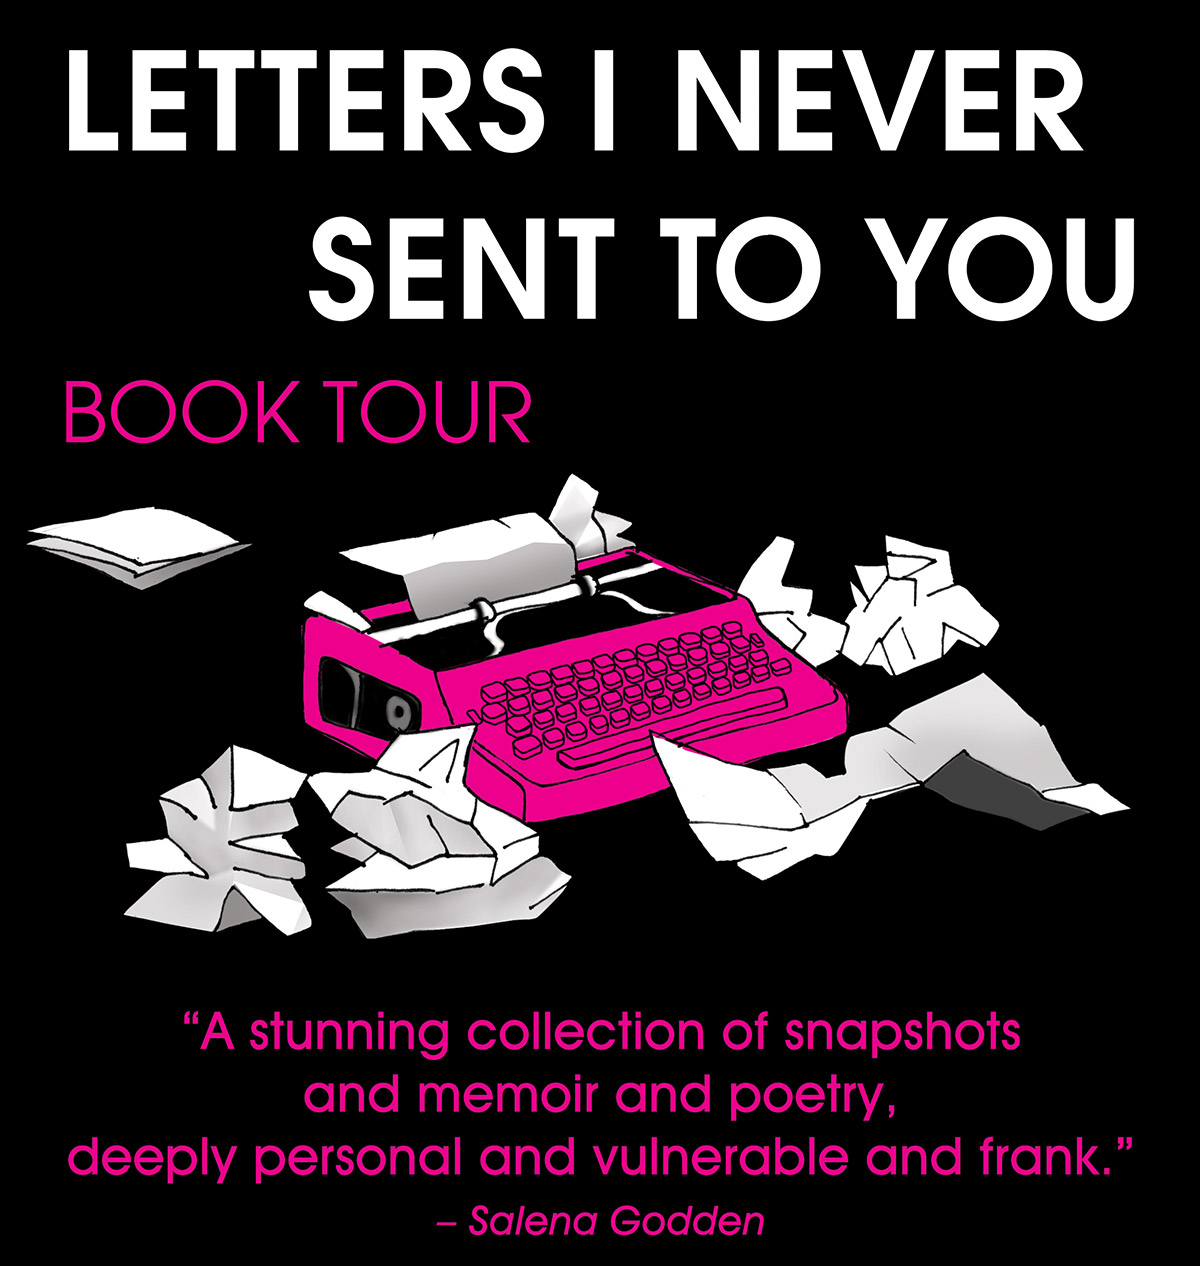 Letters I Never Sent You by Paula Varjack